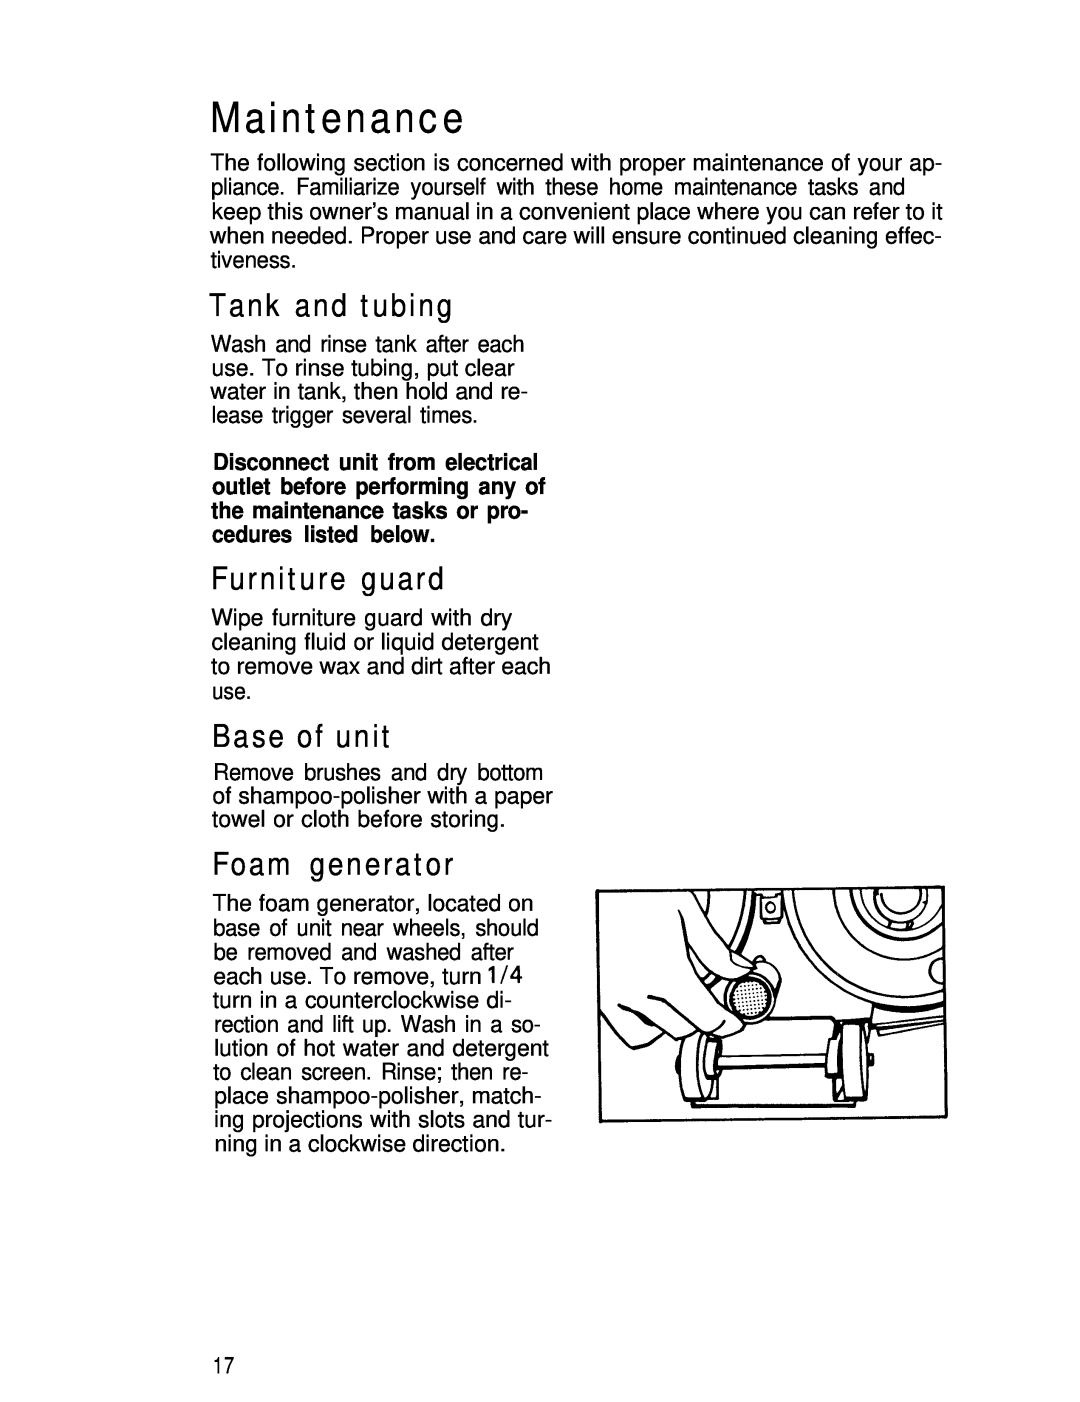 Hoover Shampoo- Polisher manual Maintenance, Tank and tubing, Furniture guard, Base of unit, Foam generator 